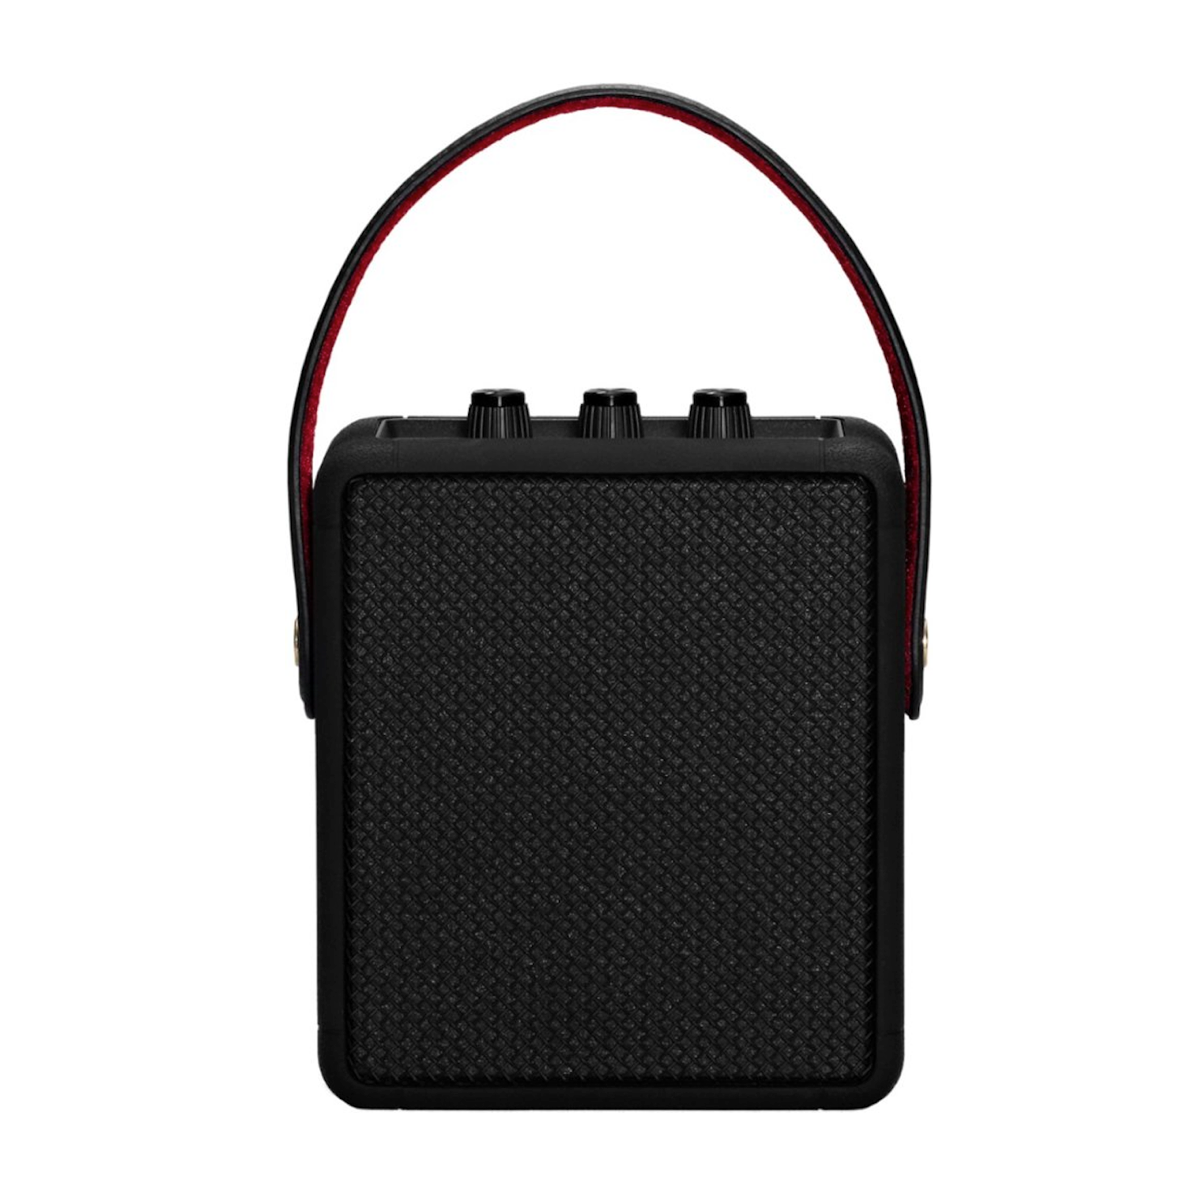 Marshall Stockwell II - Portable Bluetooth Speaker - AVStore